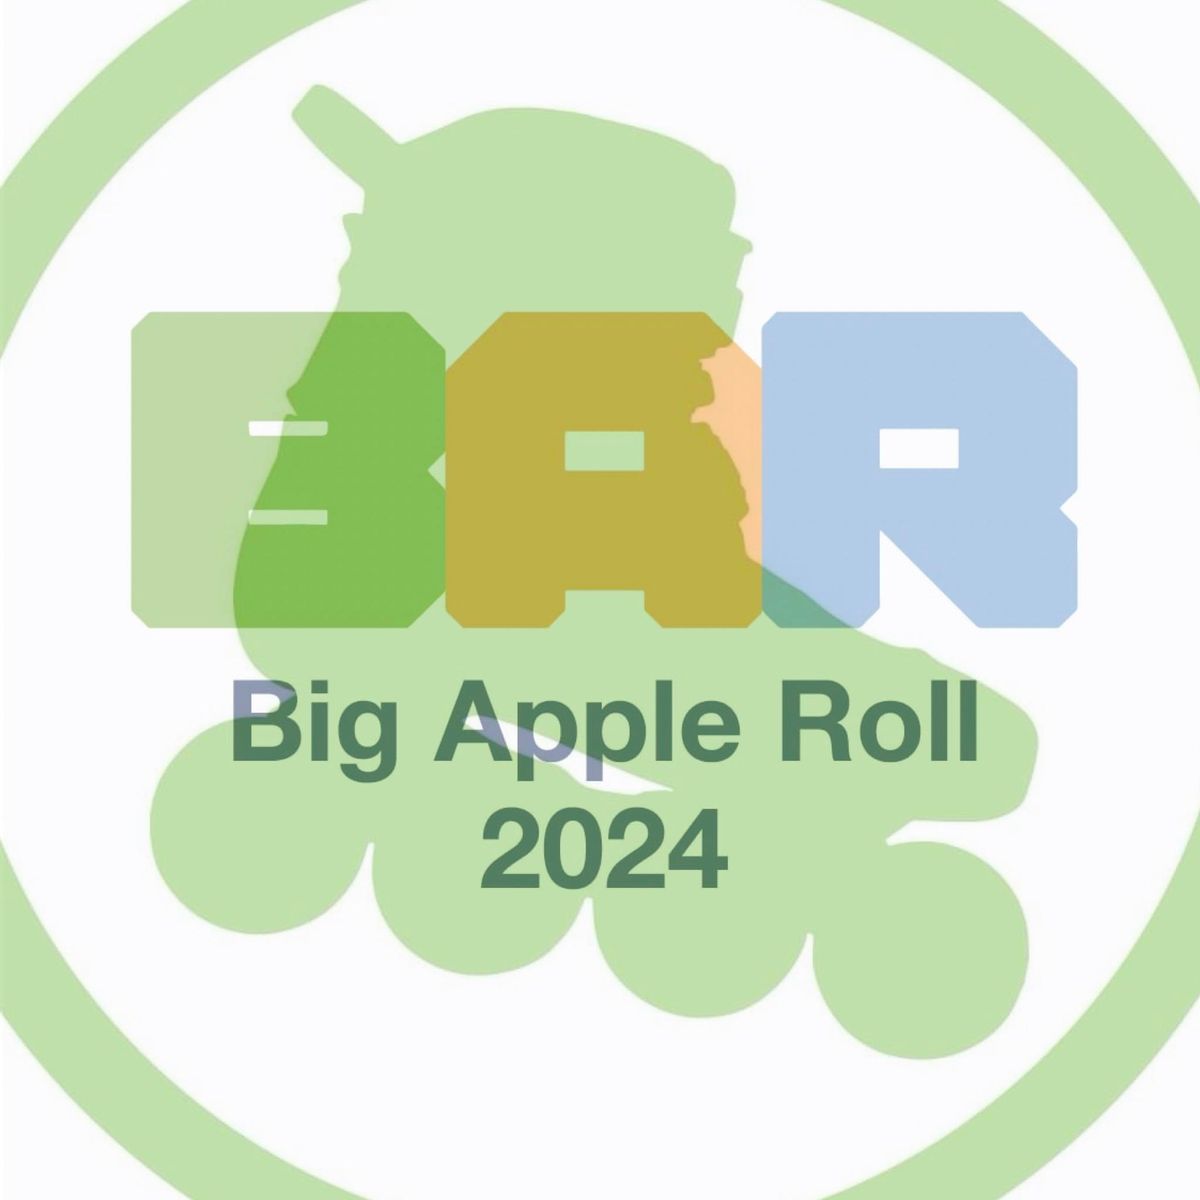 Big Apple Roll 2024